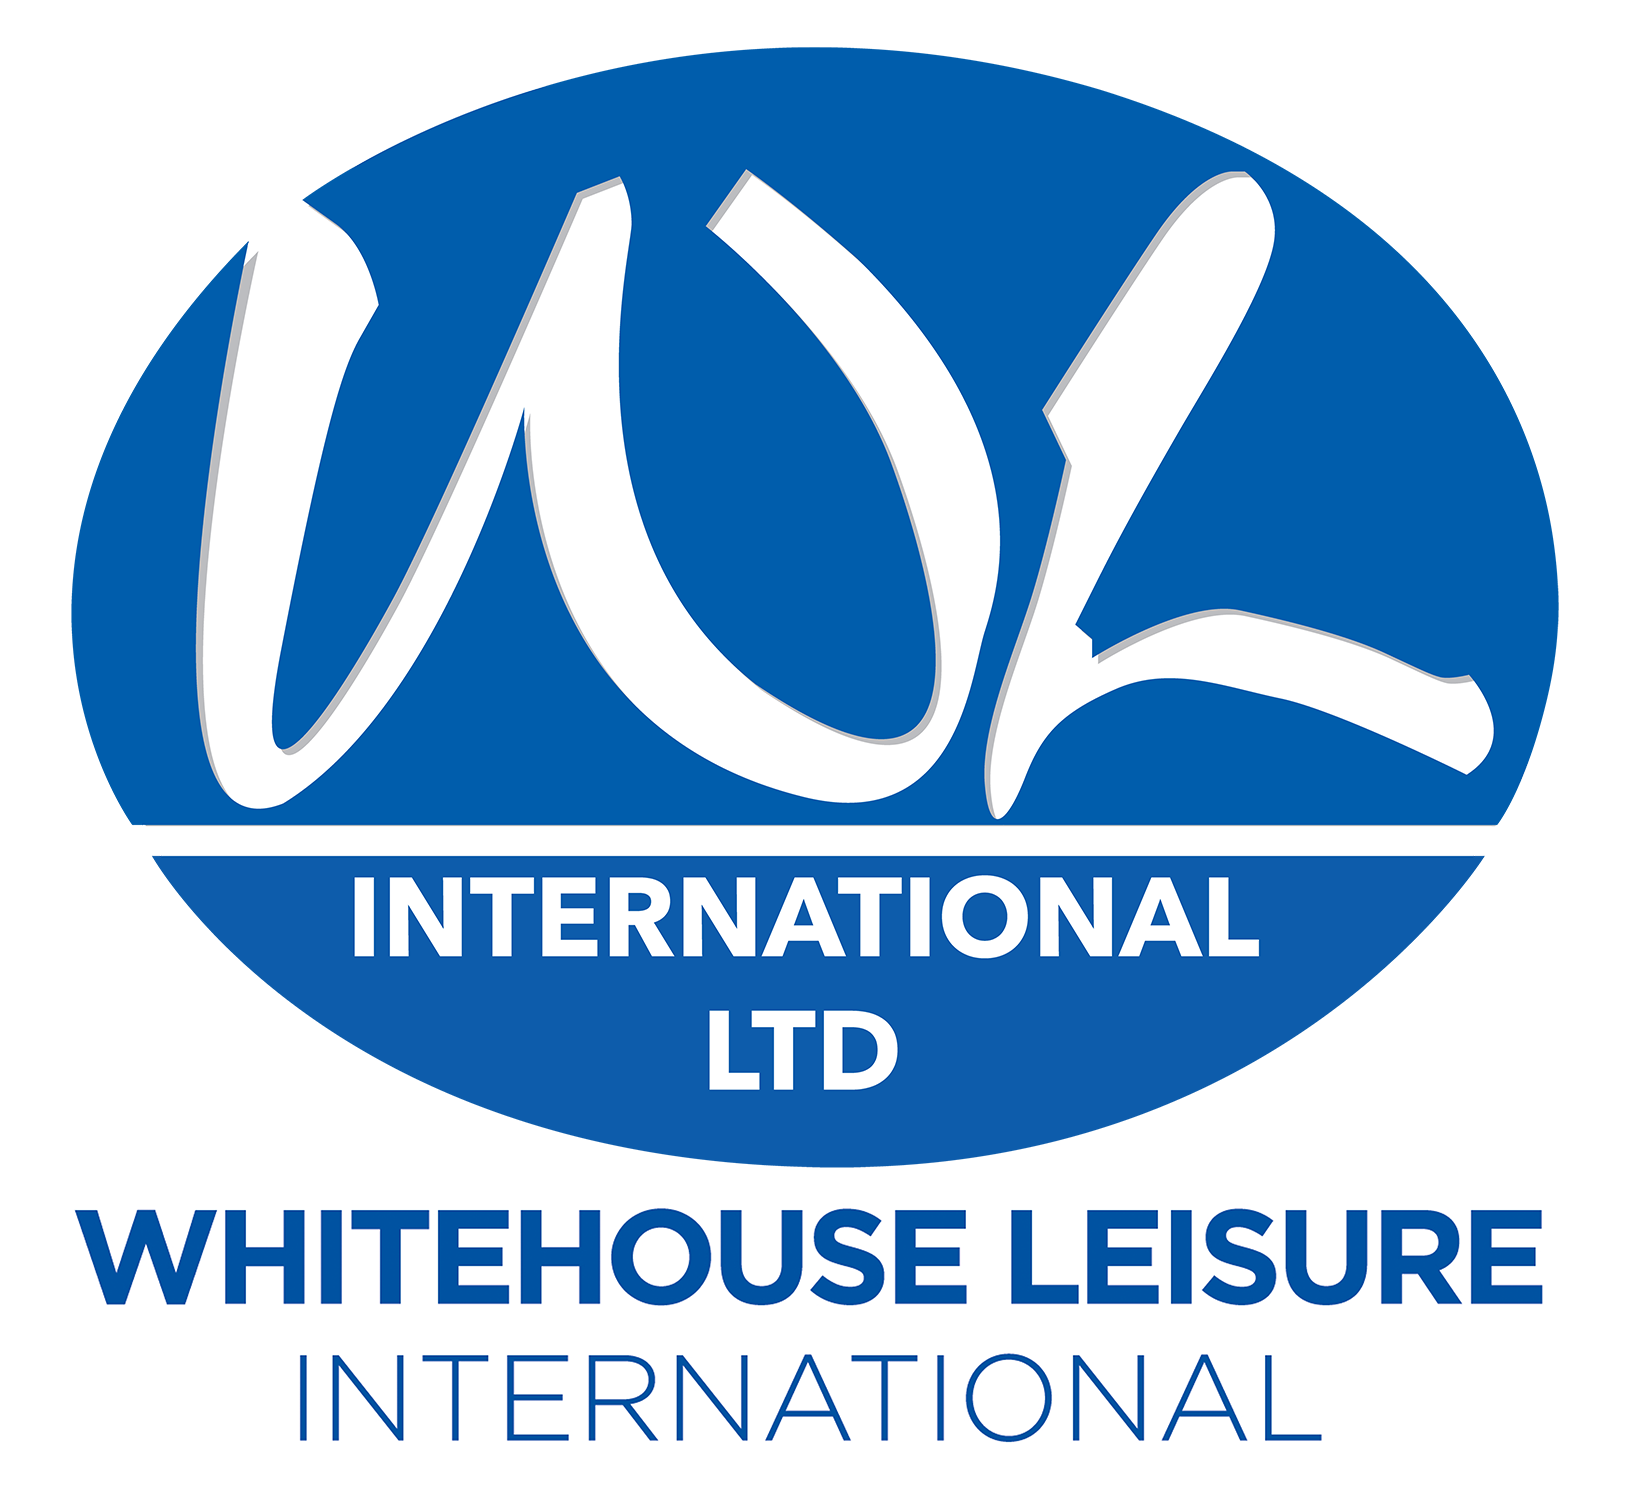 Whitehouse Leisure International Ltd